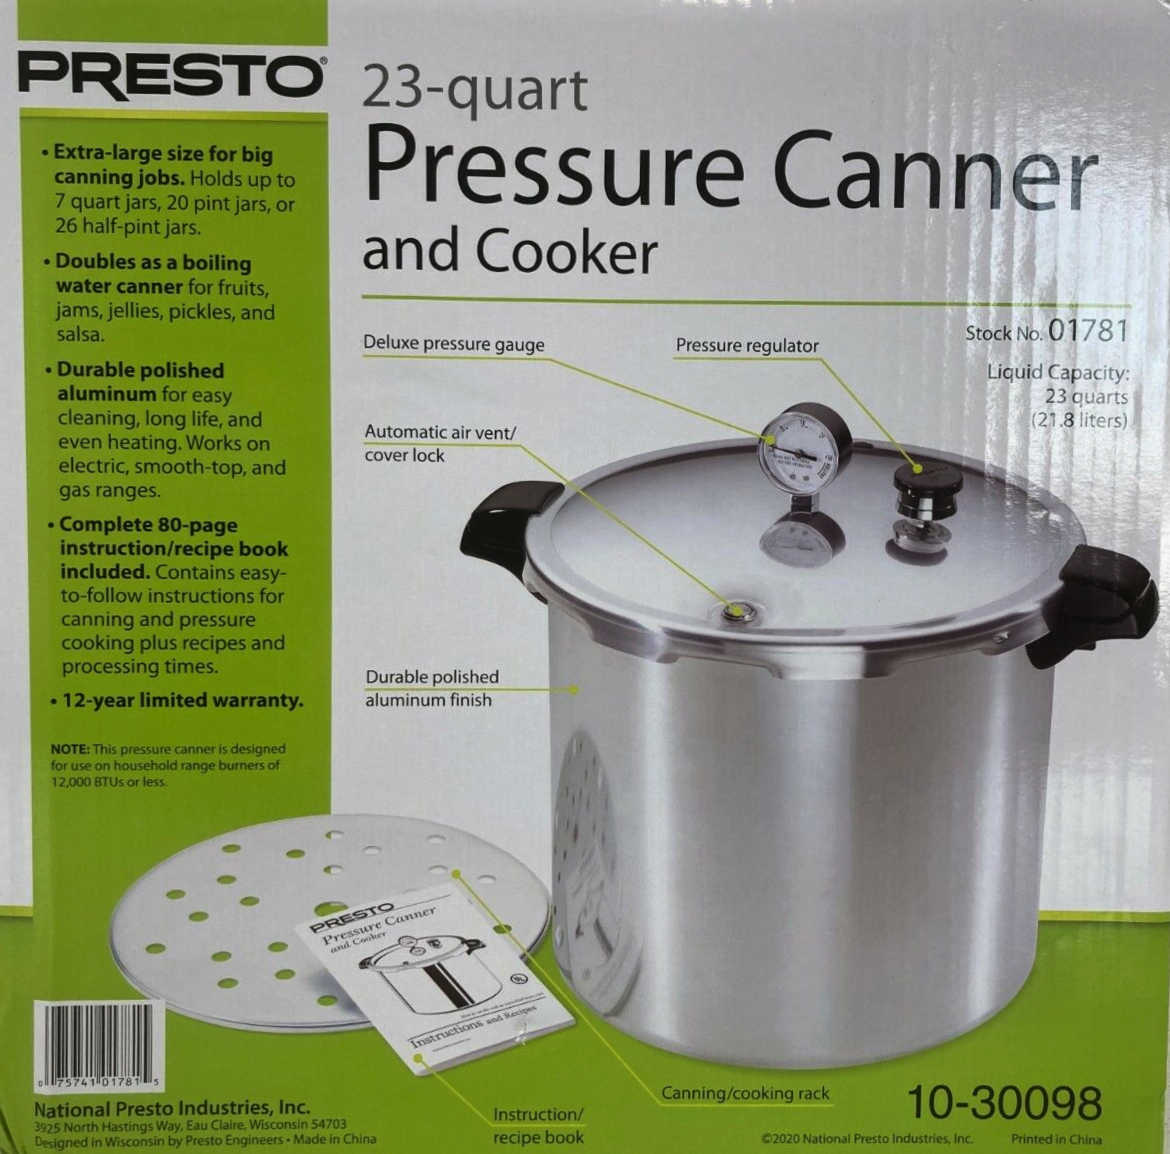 https://www.mycolabs.com/resize/Shared/Images/Product/Presto-23-Quart-Pressure-Cooker-Sterilizer-Model-01781/Presto_23Q_box_web.jpg?bw=1000&w=1000&bh=1000&h=1000